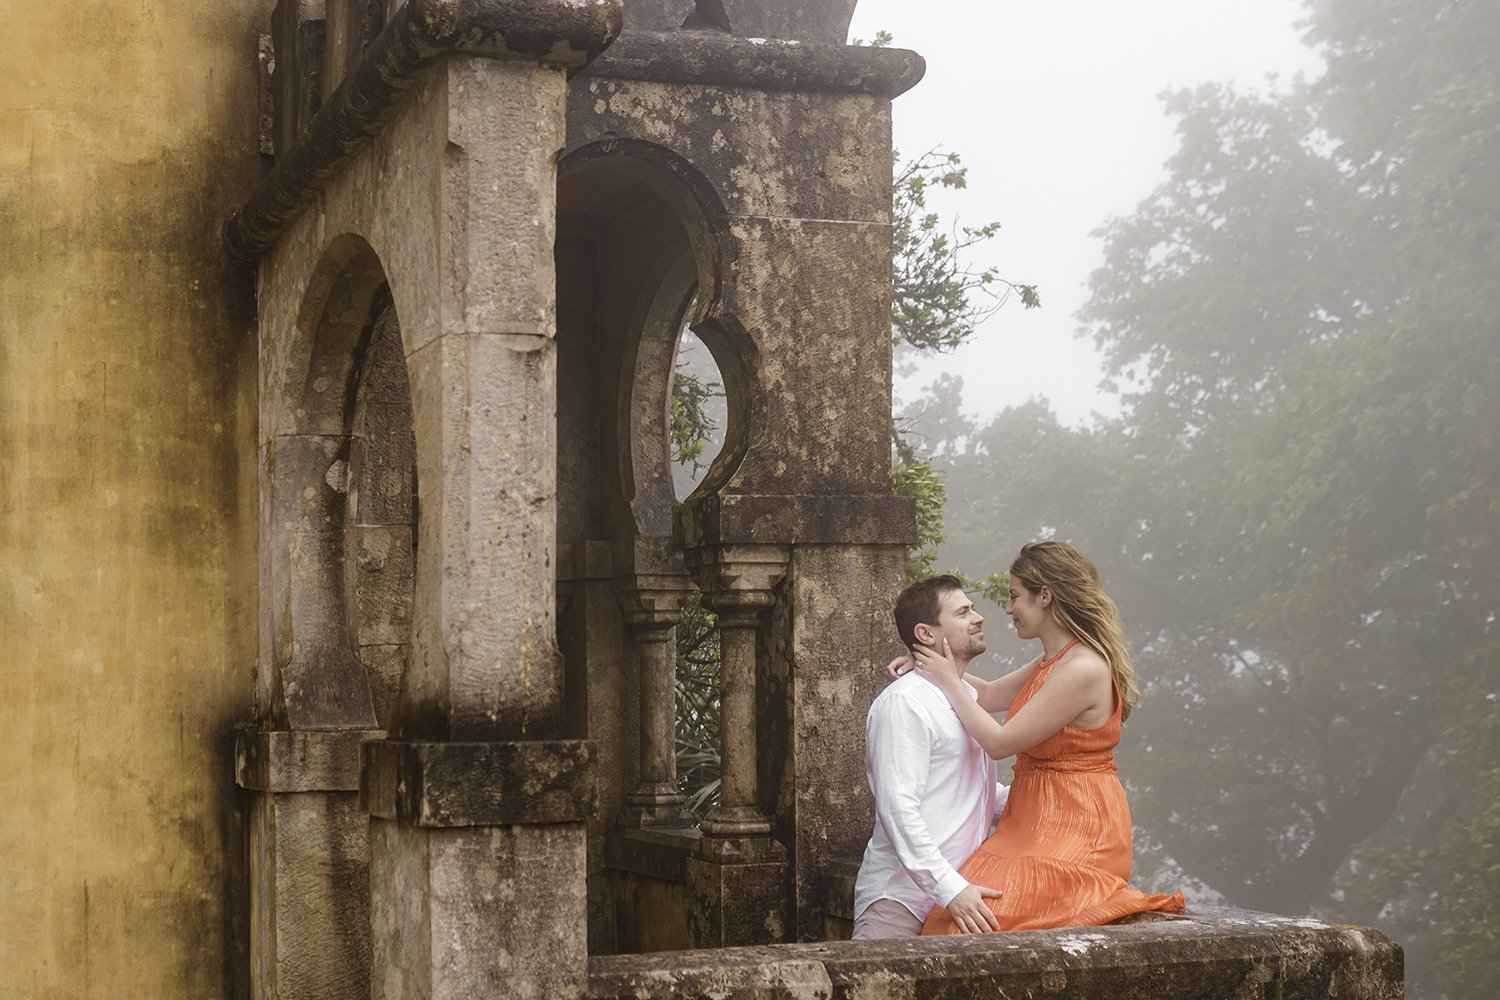 pena-palace-sintra-surprise-wedding-proposal-photographer-ana-lucia-terra-fotografia-58.jpg